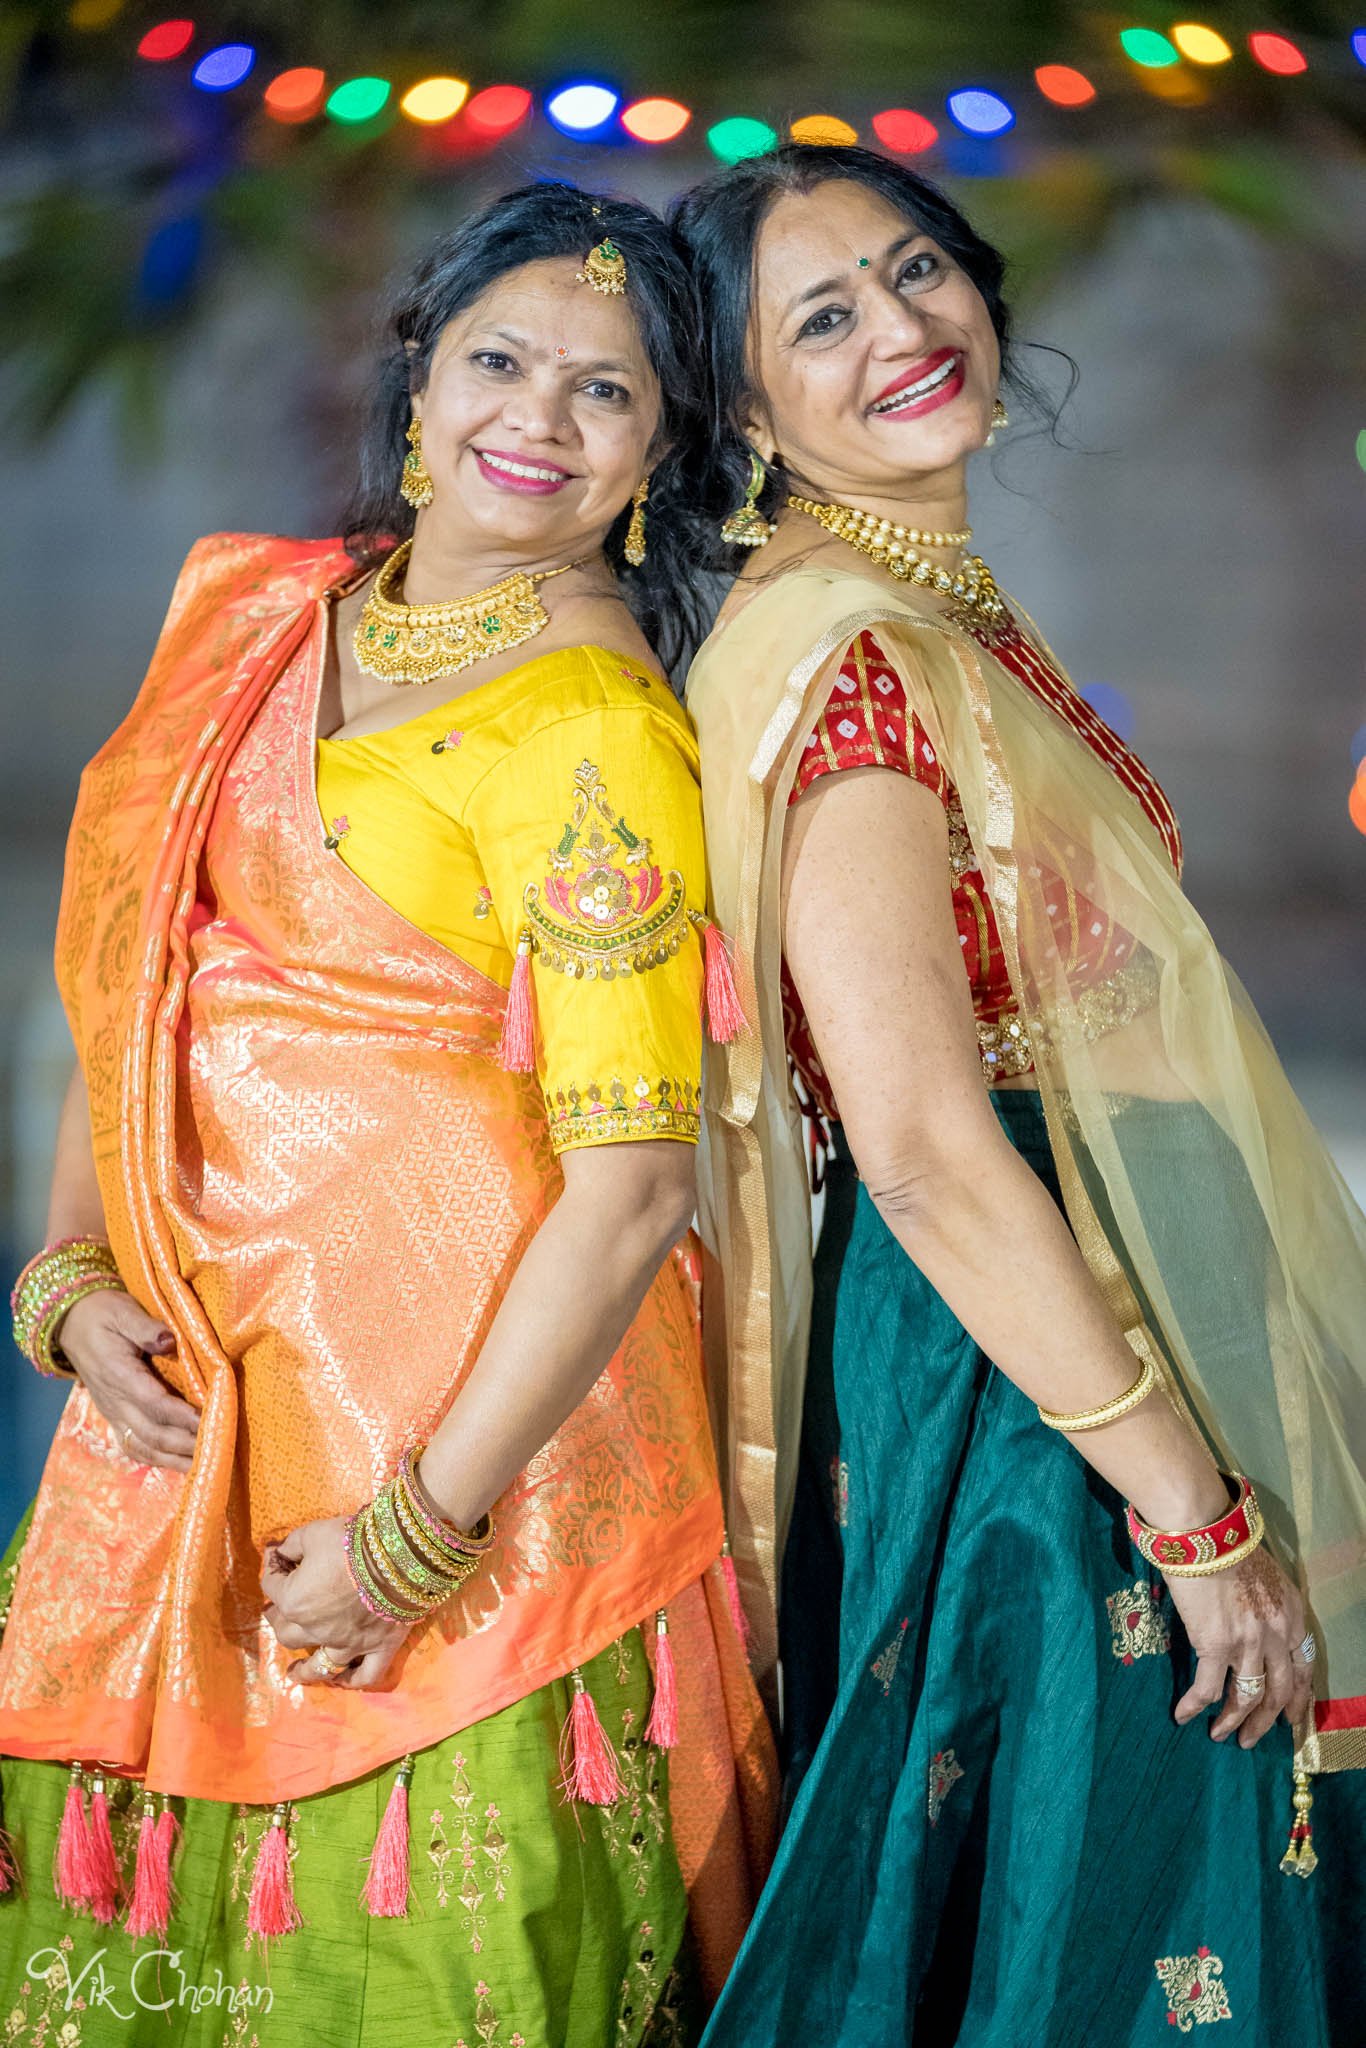 2022-02-04-Hely-&-Parth-Garba-Night-Indian-Wedding-Vik-Chohan-Photography-Photo-Booth-Social-Media-VCP-210.jpg